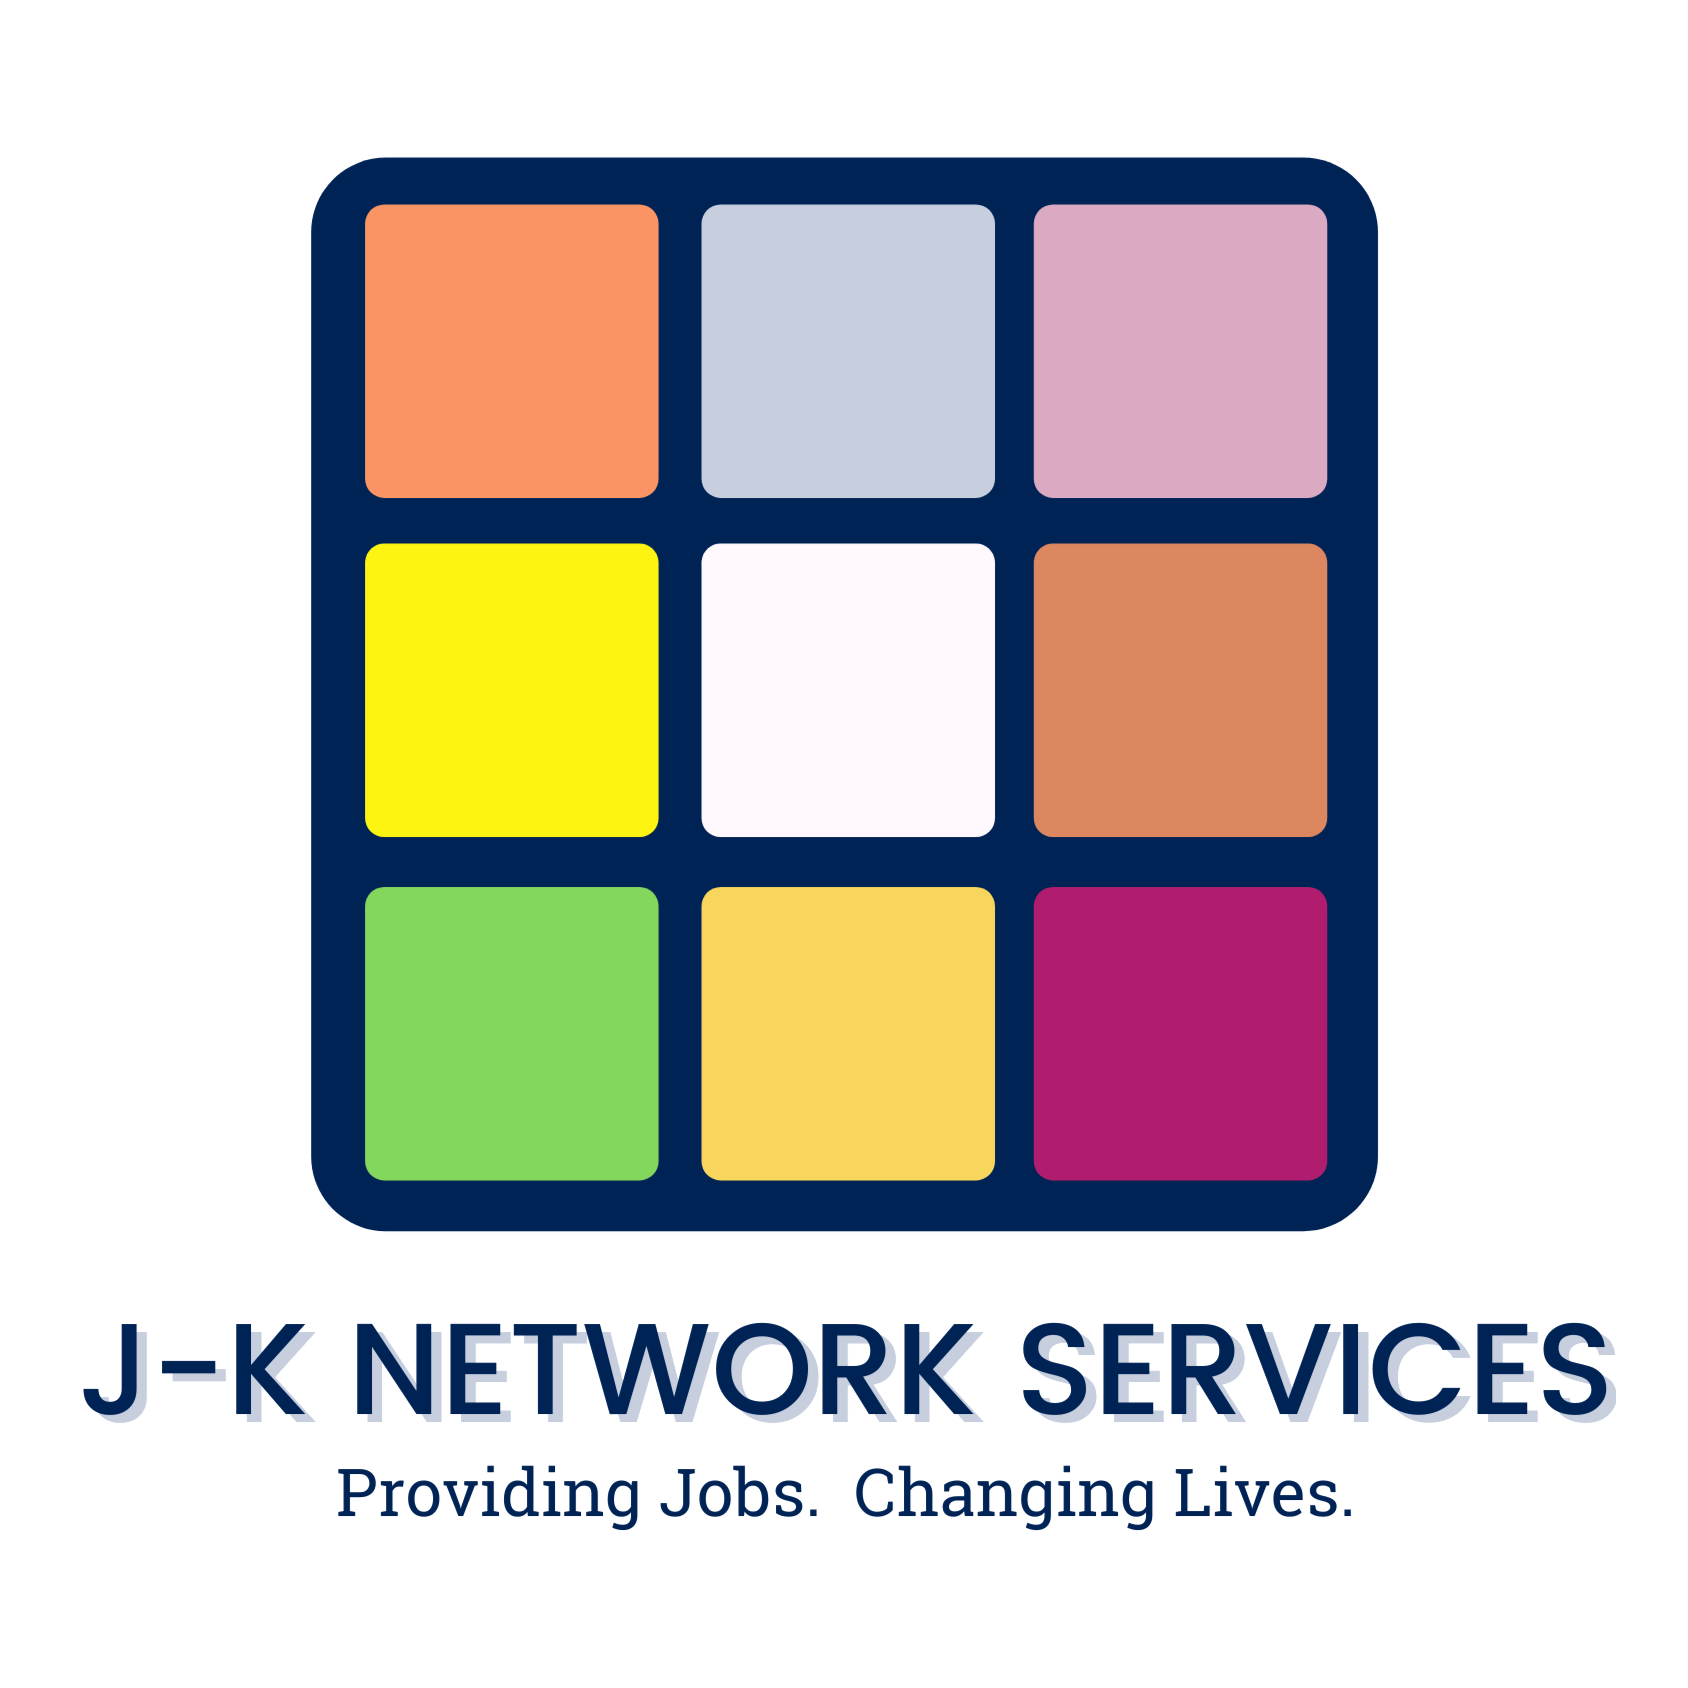 J-K Network Services logo